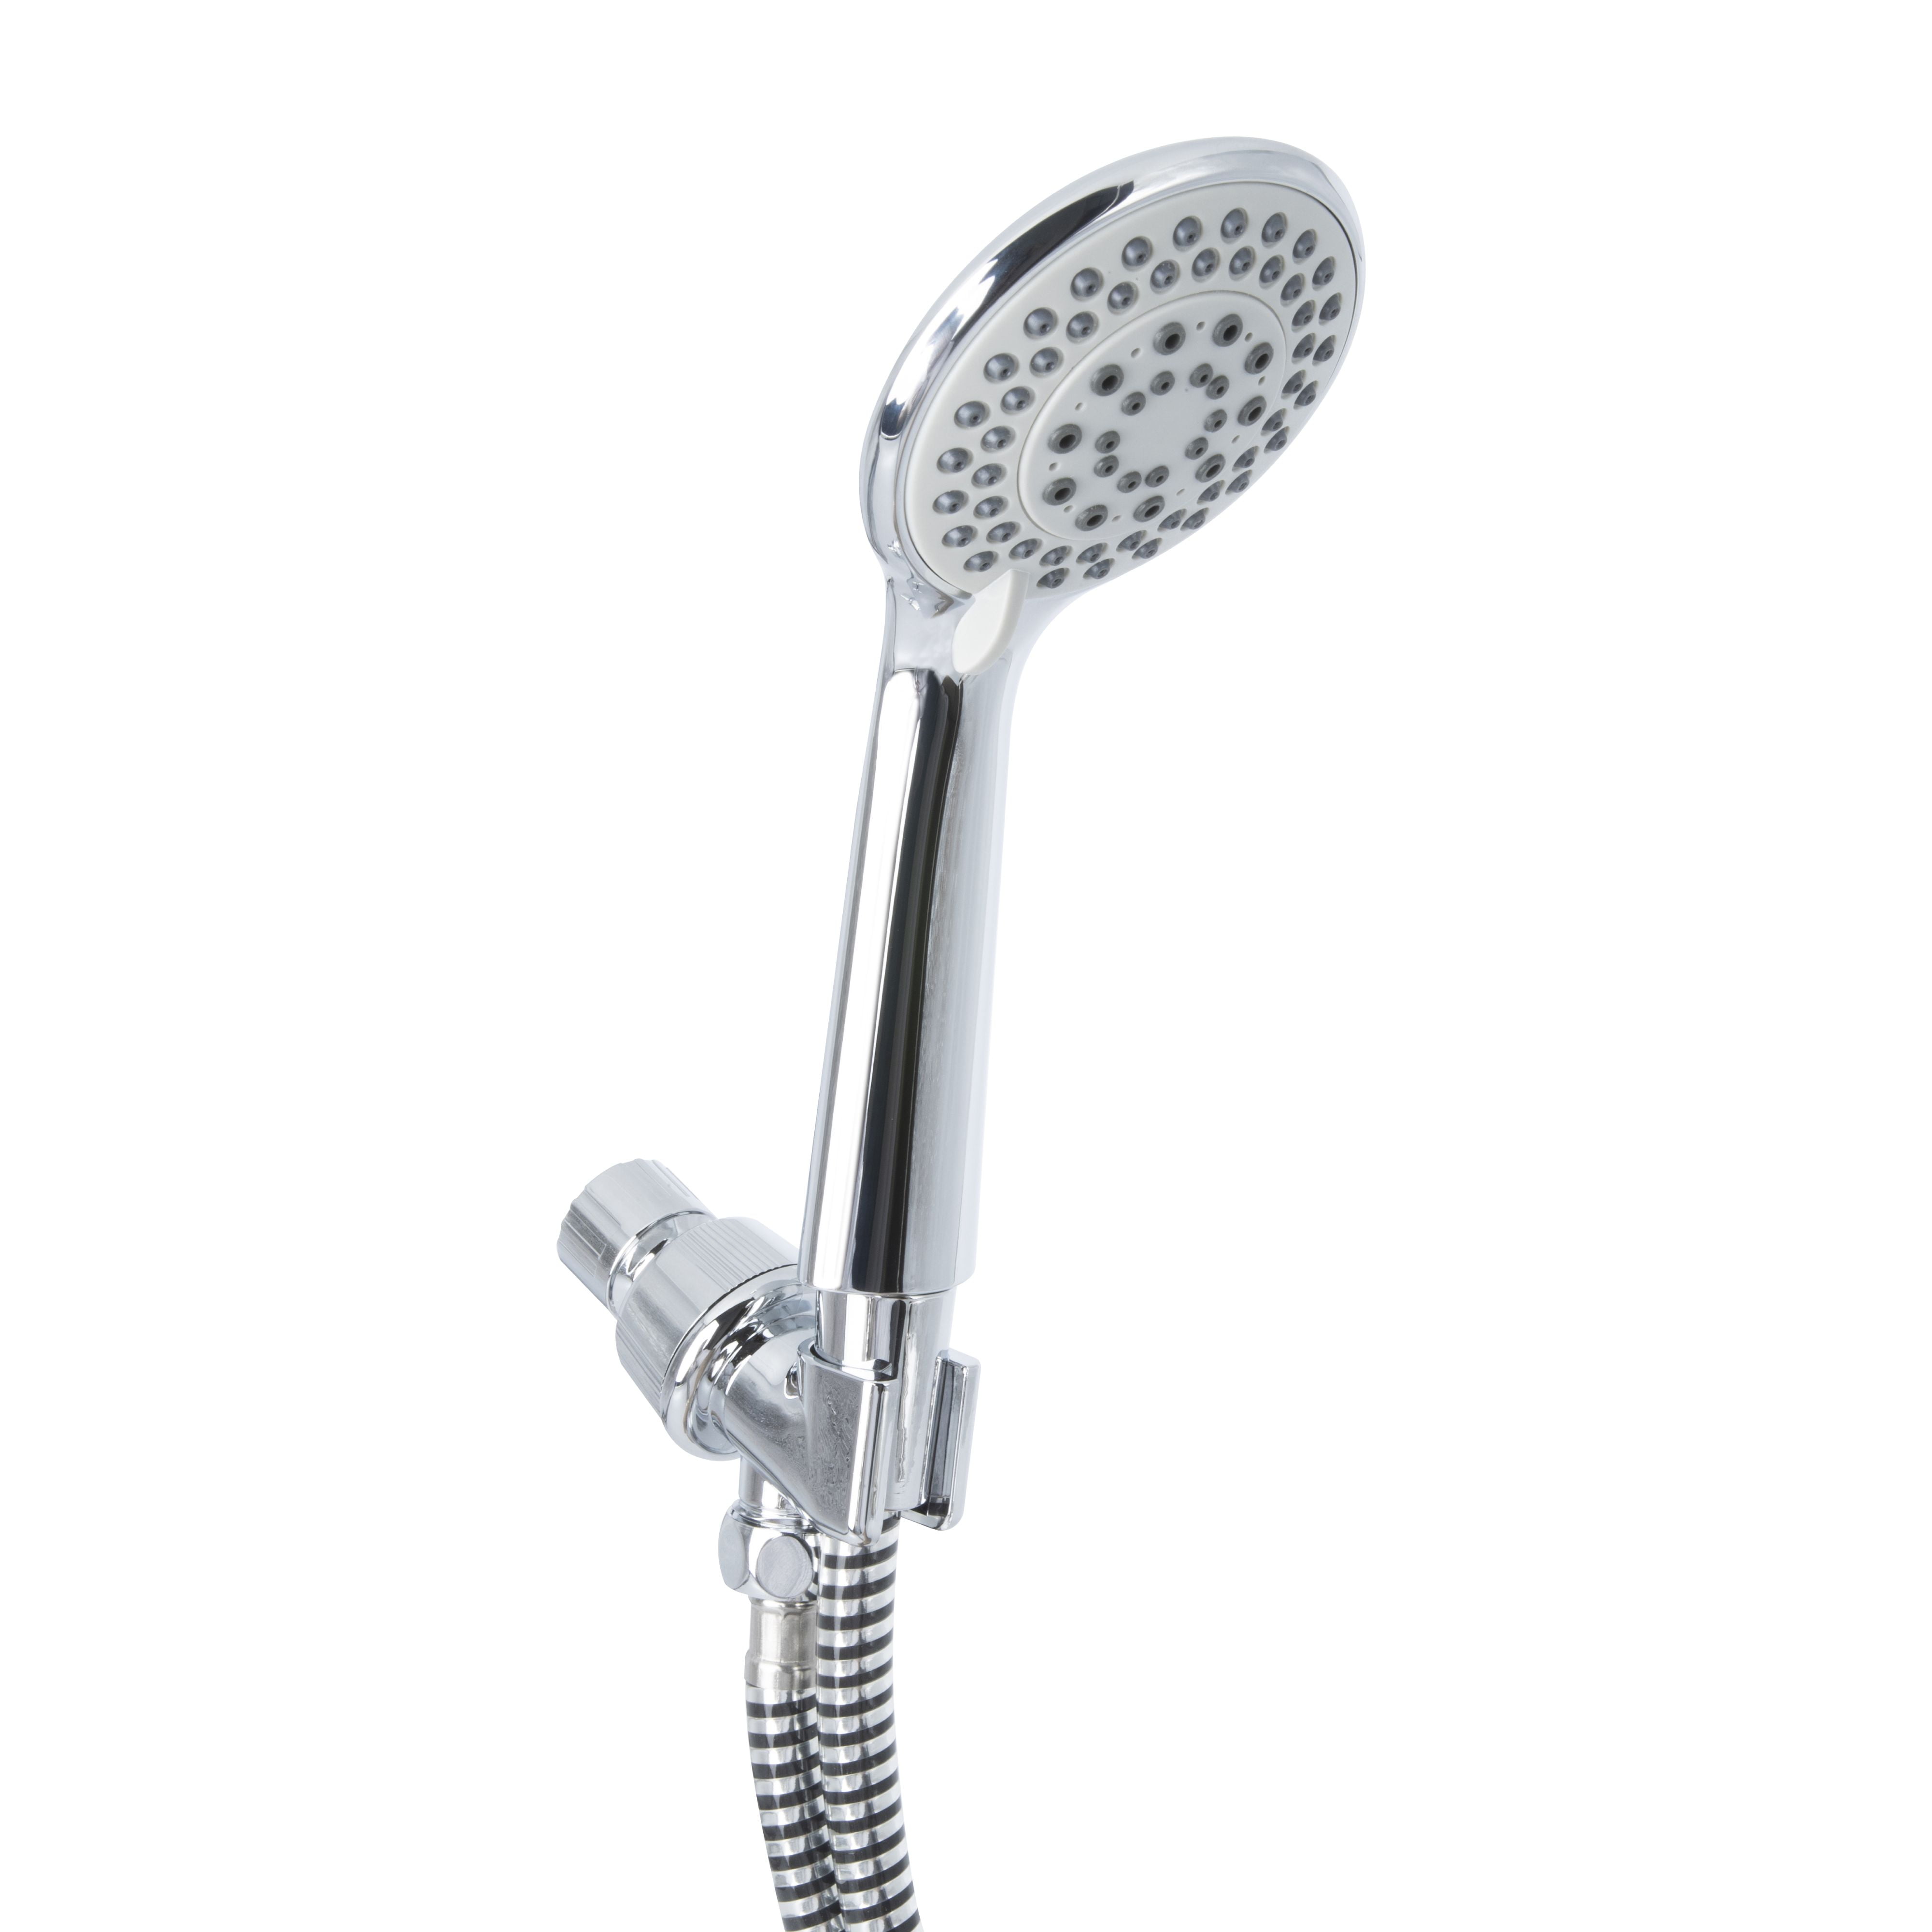 26468 BodySpa 1-Spray Handheld Shower Head in Brushed Nickel with Comfort Control